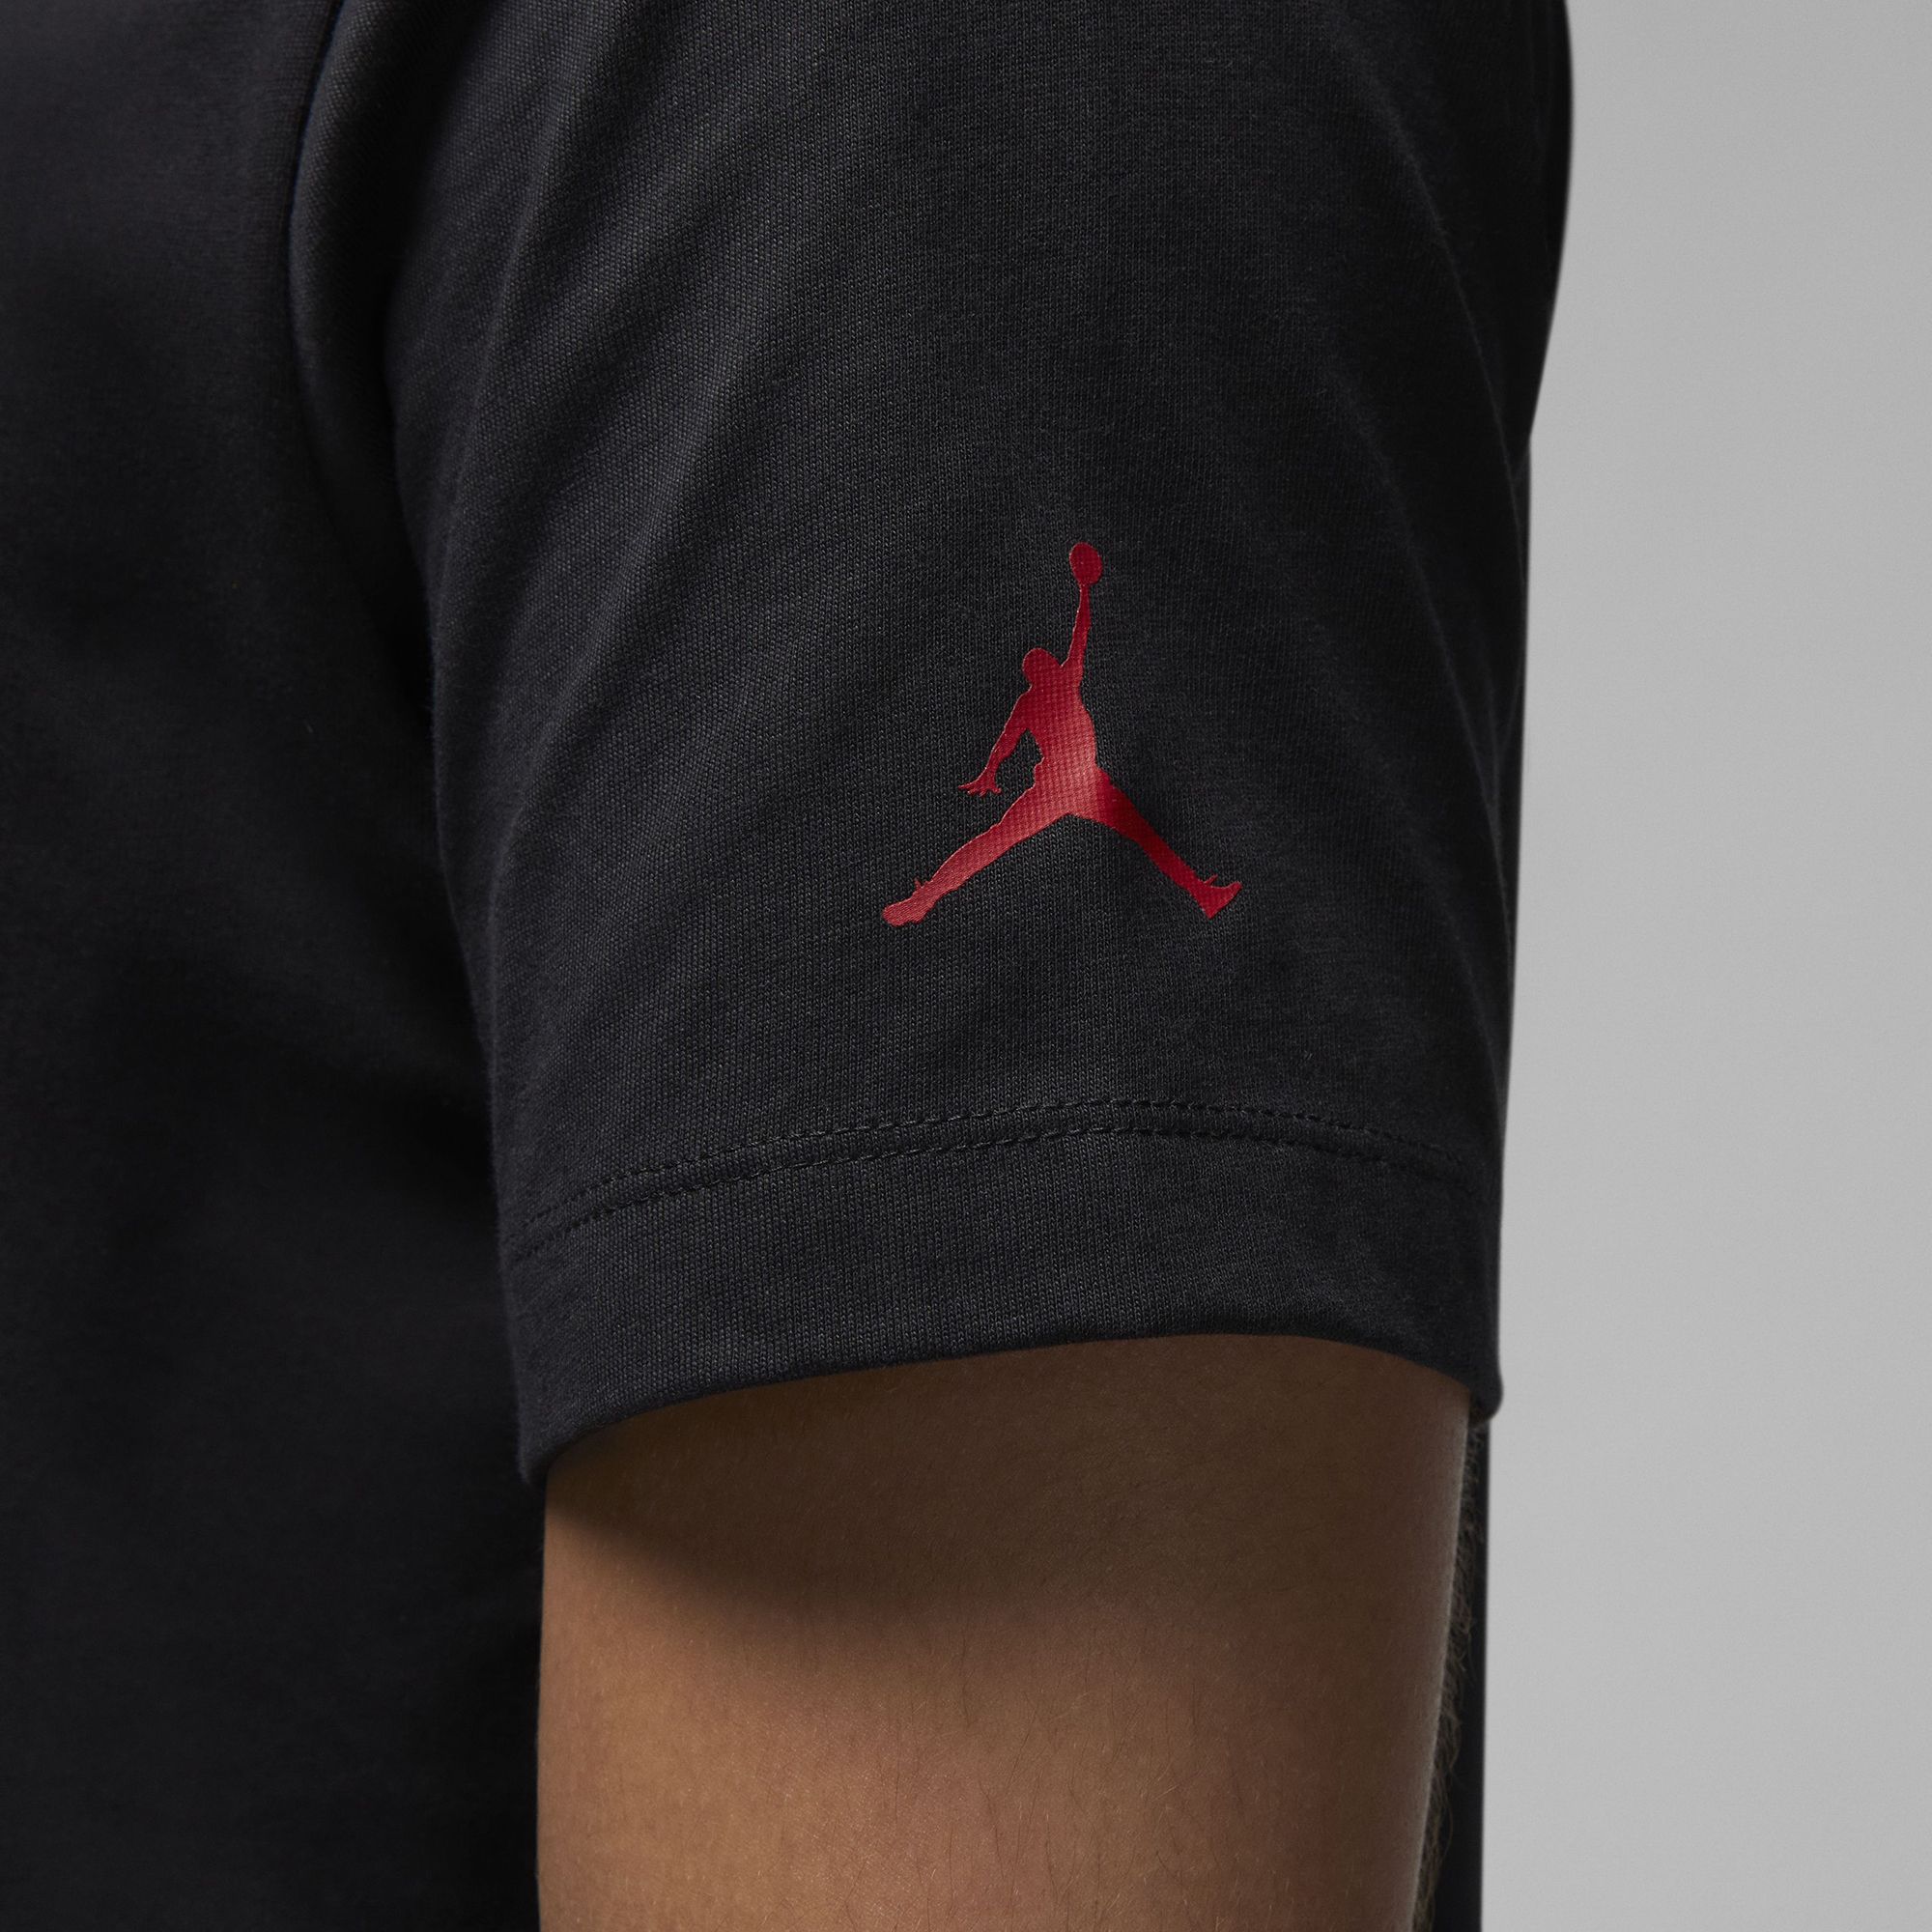 Jordan Men's Brand Graphic T-Shirt